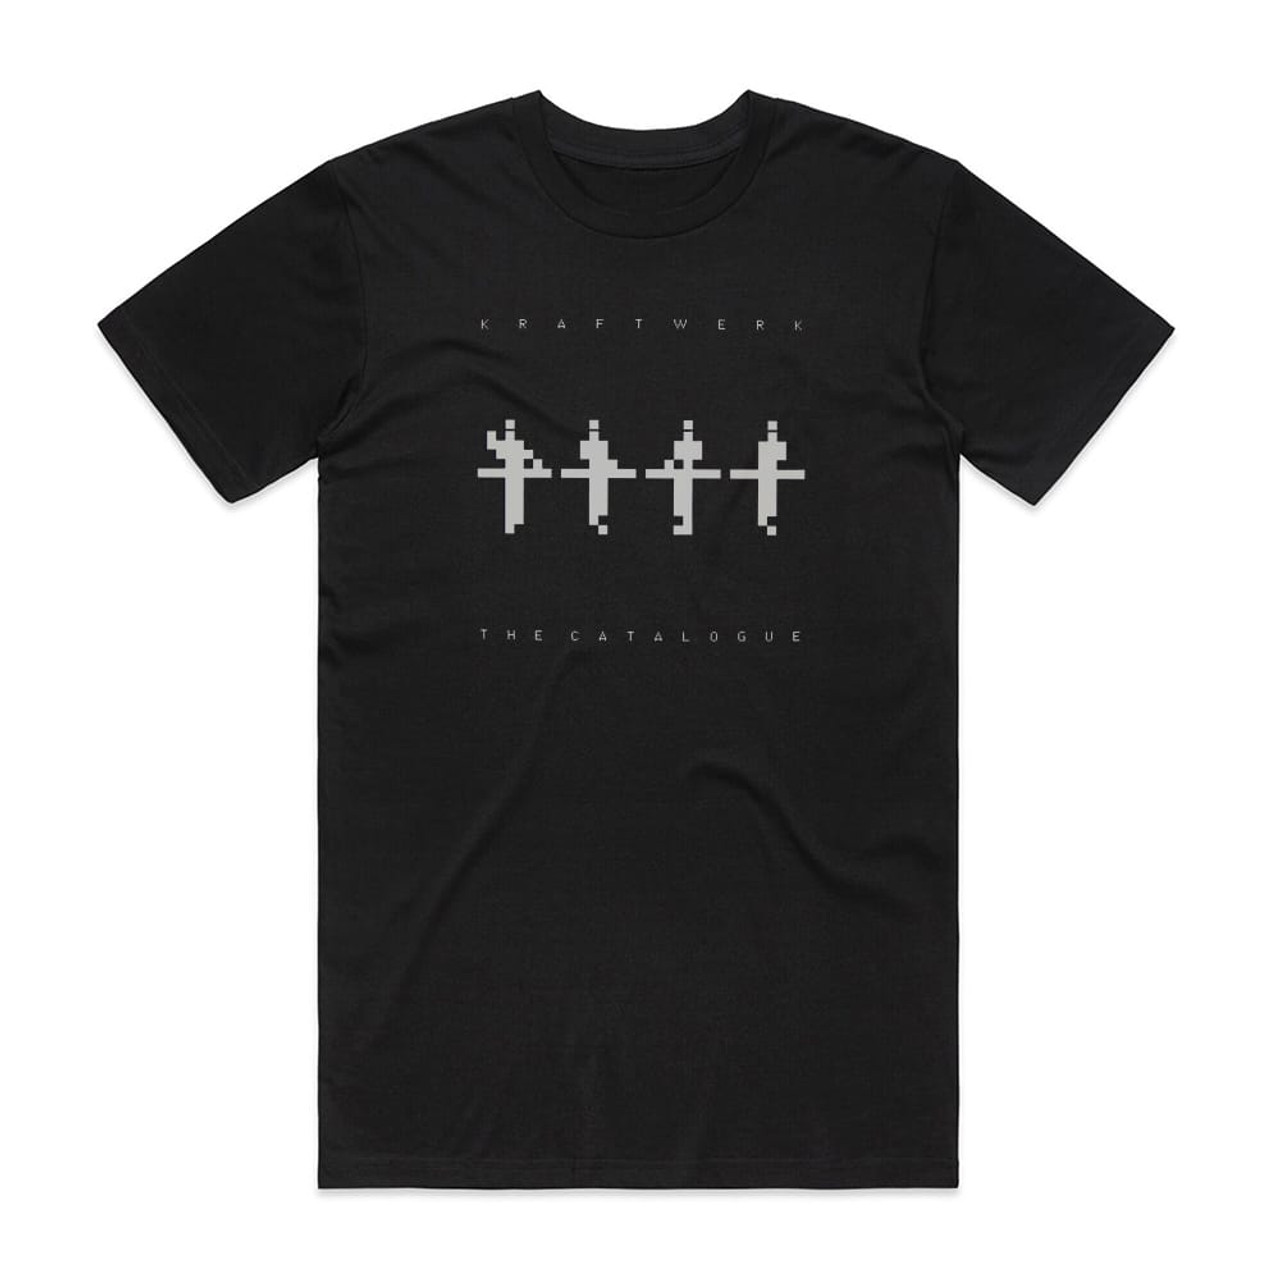 Kraftwerk The Catalogue Album Cover T-Shirt Black